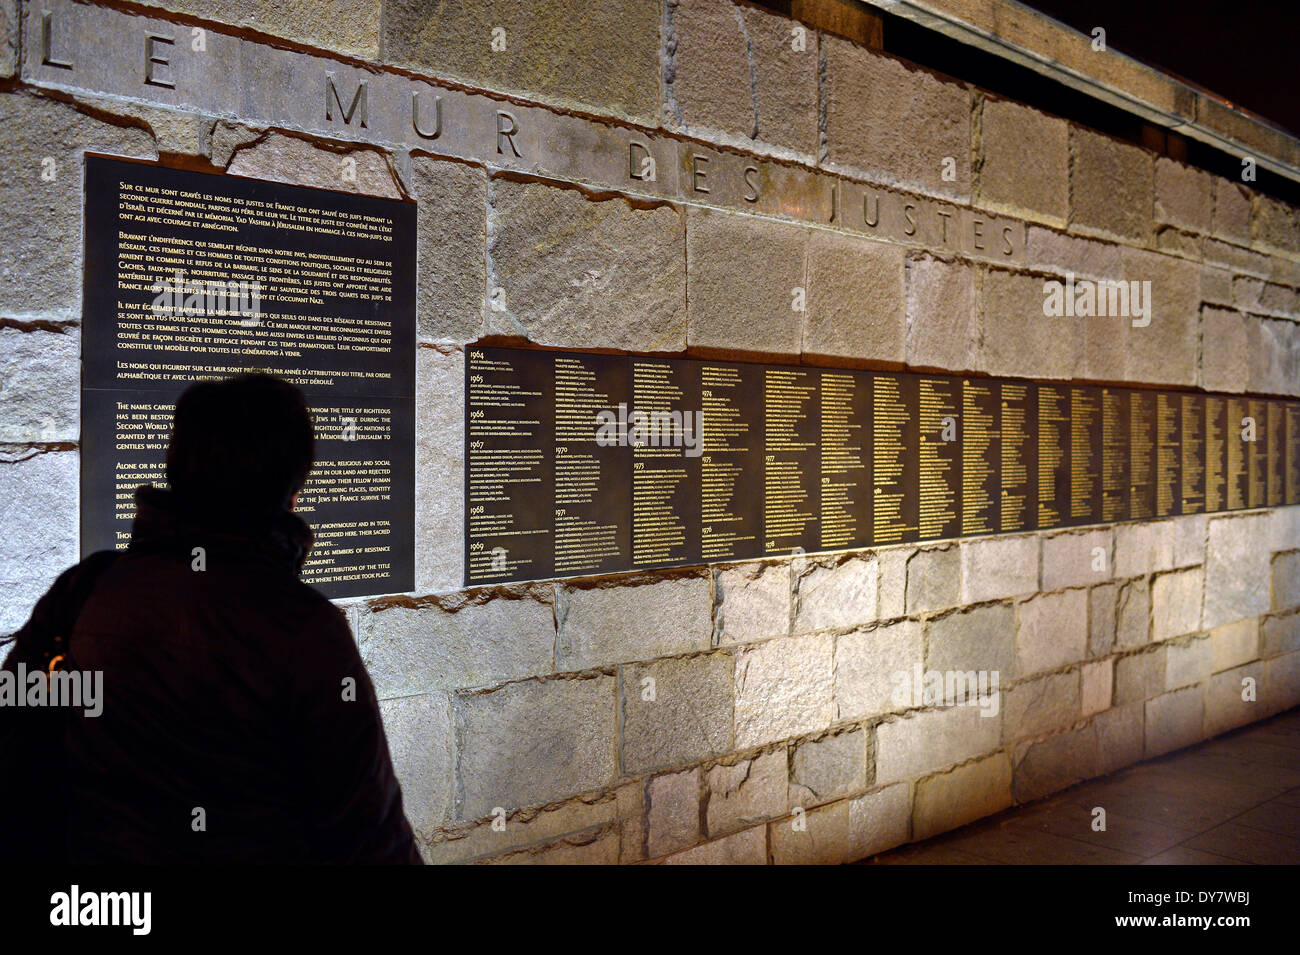 Person standing in front of the Le Mur de Justes plaque at the Memorial de la Shoah, central memorial to the Holocaust Stock Photo